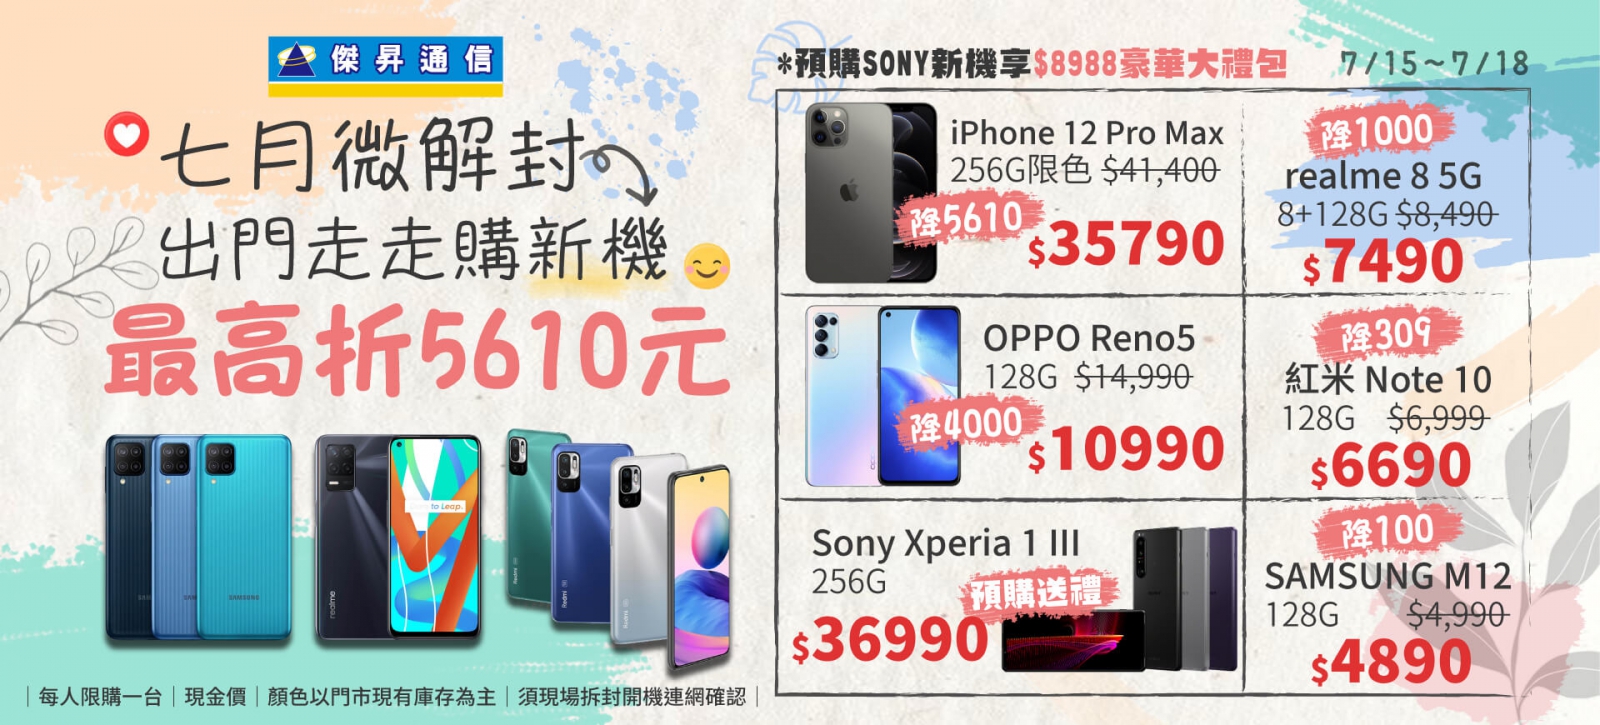 全台微解封 iPhone 12 Pro Max微降價5,600